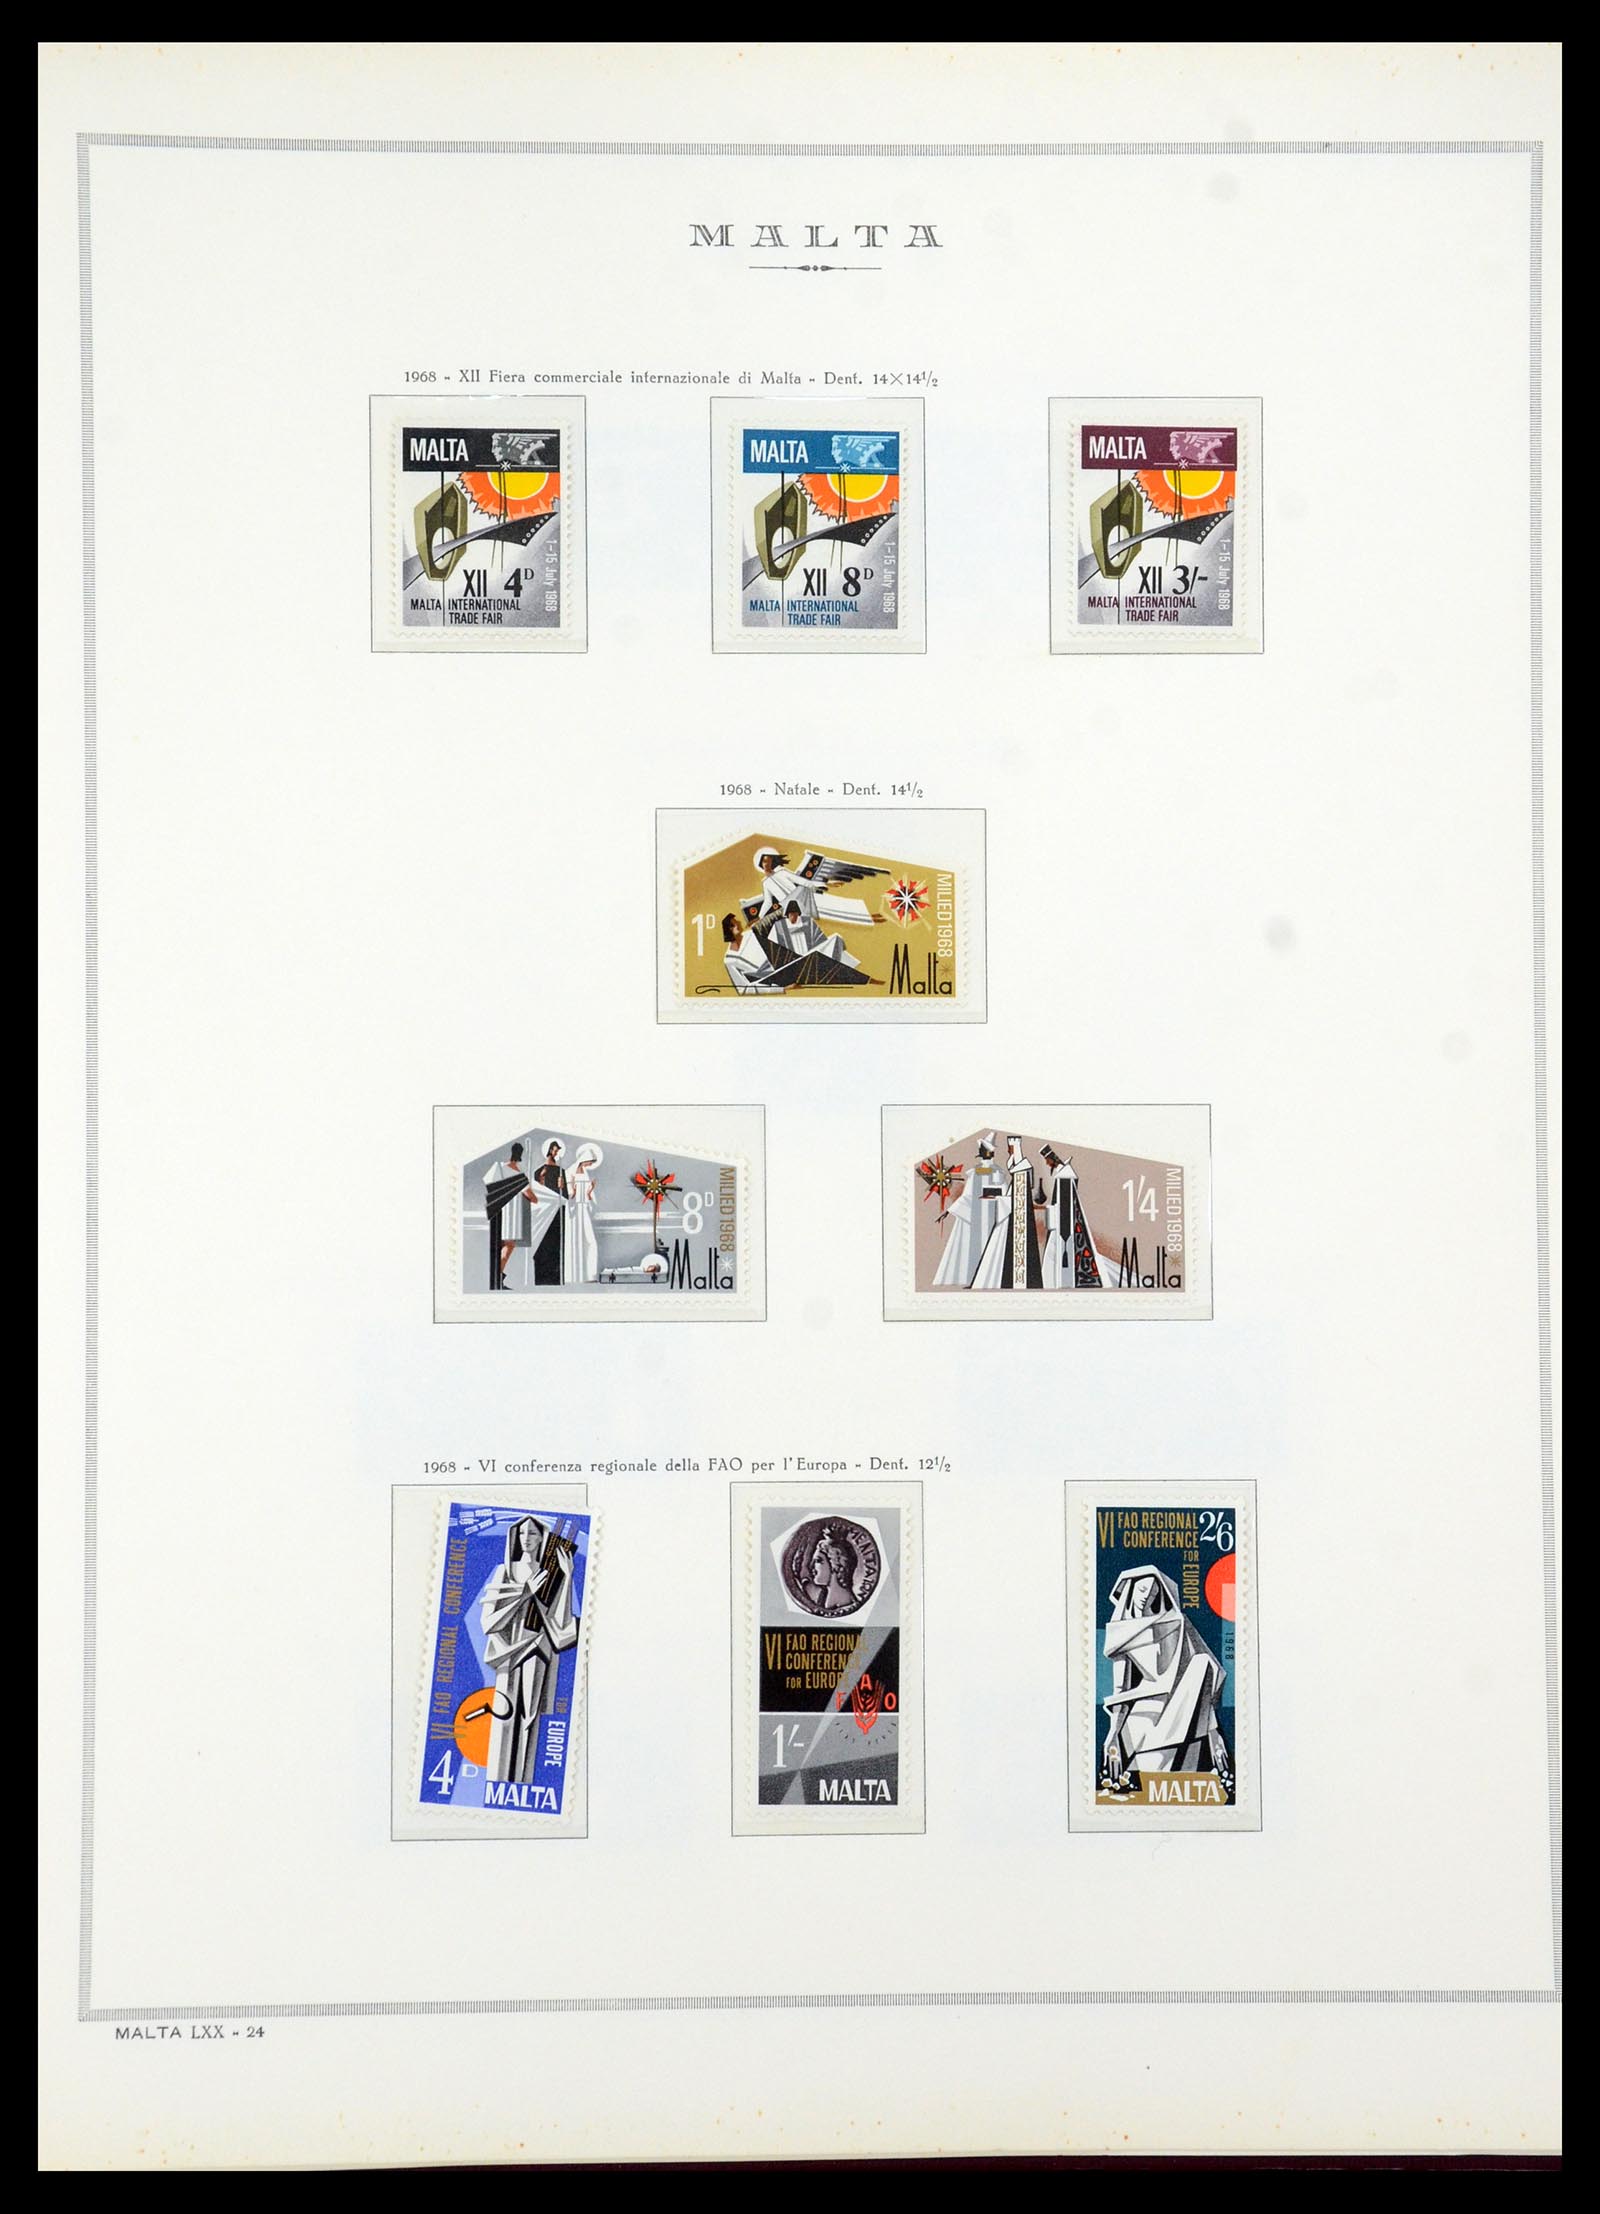 35701 009 - Stamp Collection 35701 Malta 1964-2010.